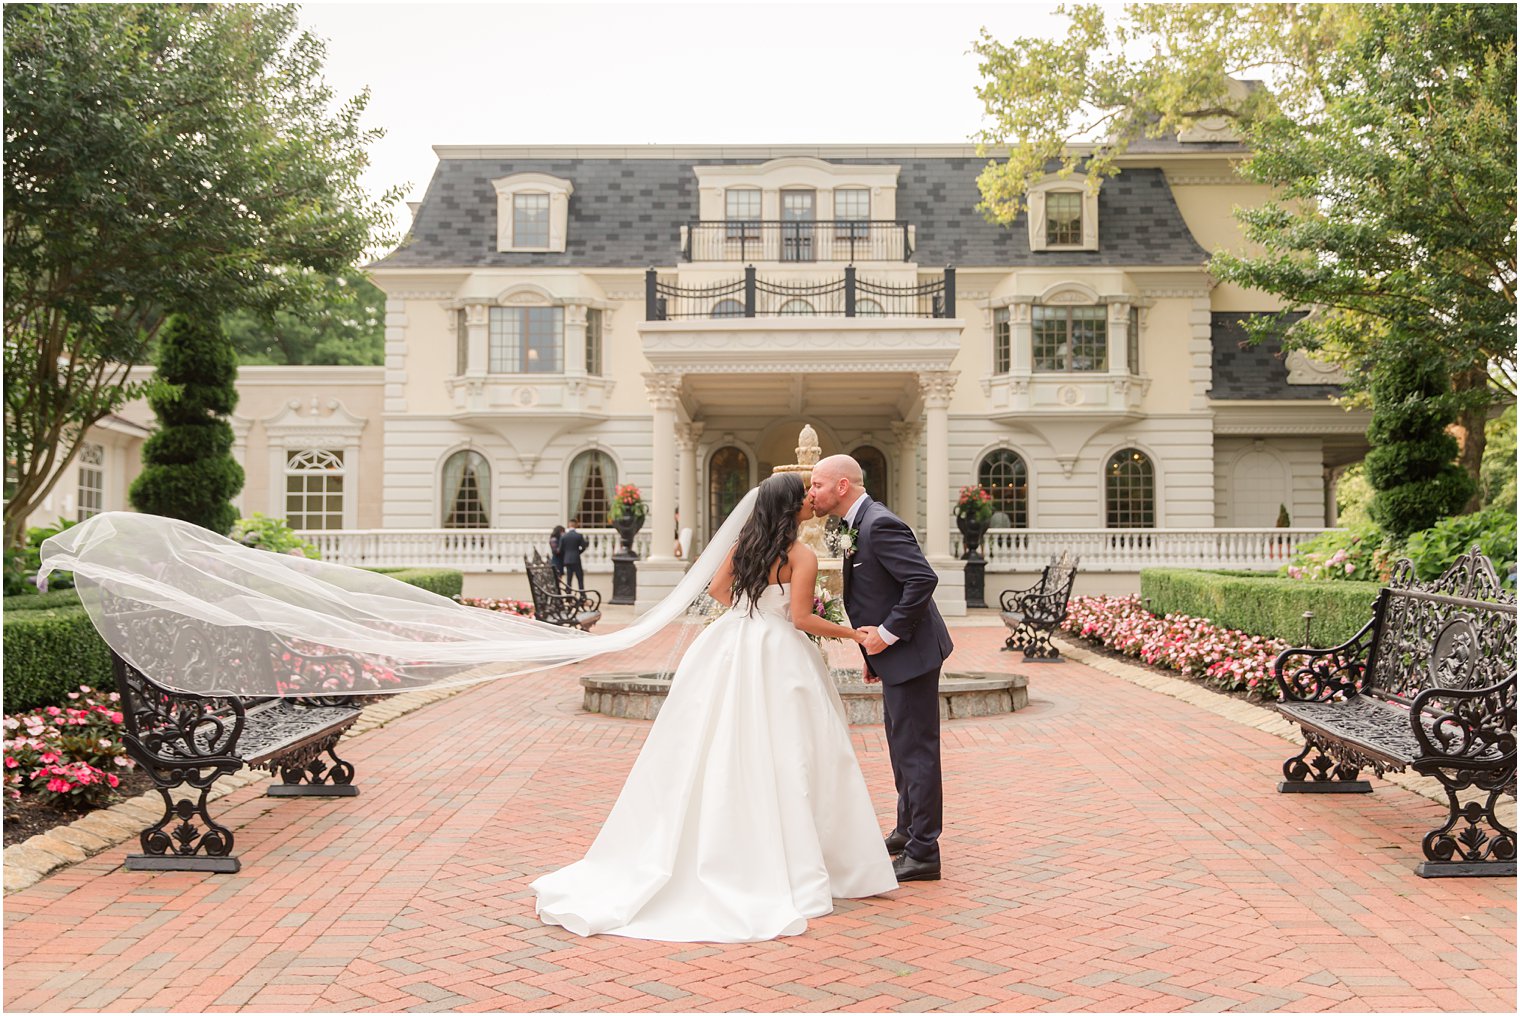 Romantic wedding photo at The Ashford Estate in Allentown NJ